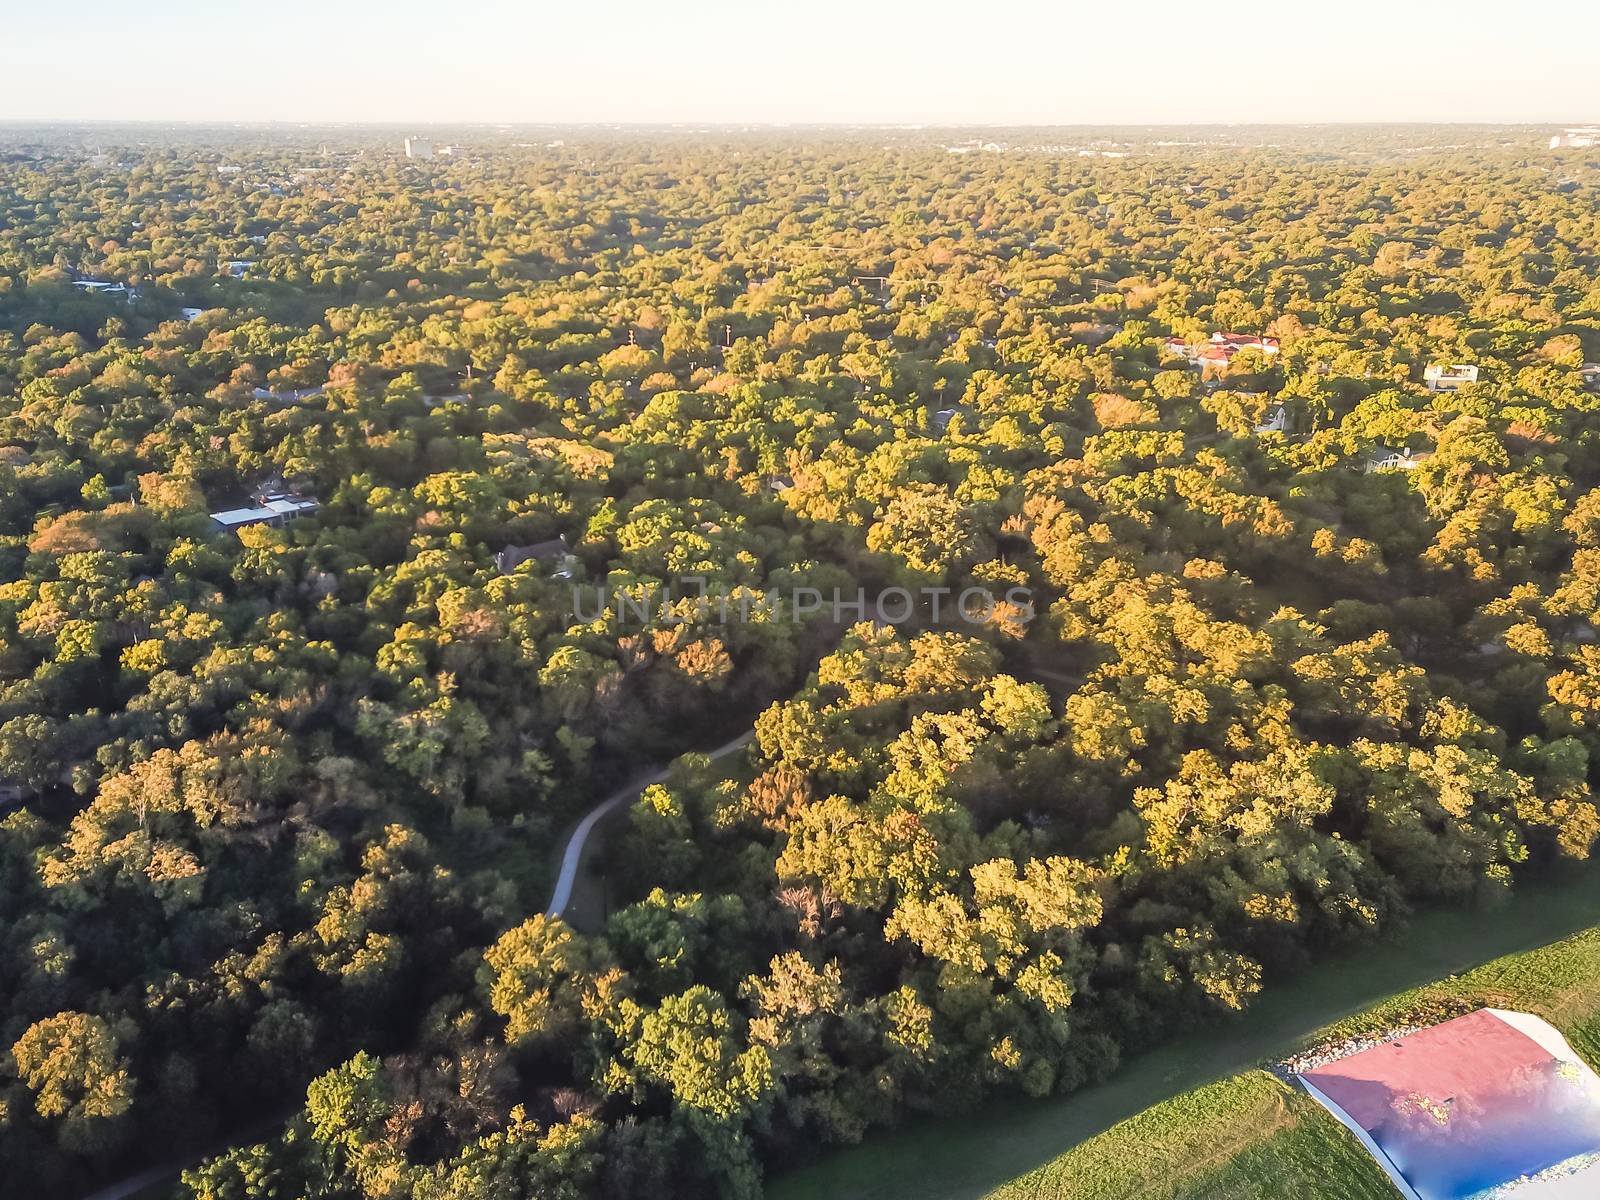 Top view Kessler park community in suburbs Dallas, Texas by trongnguyen